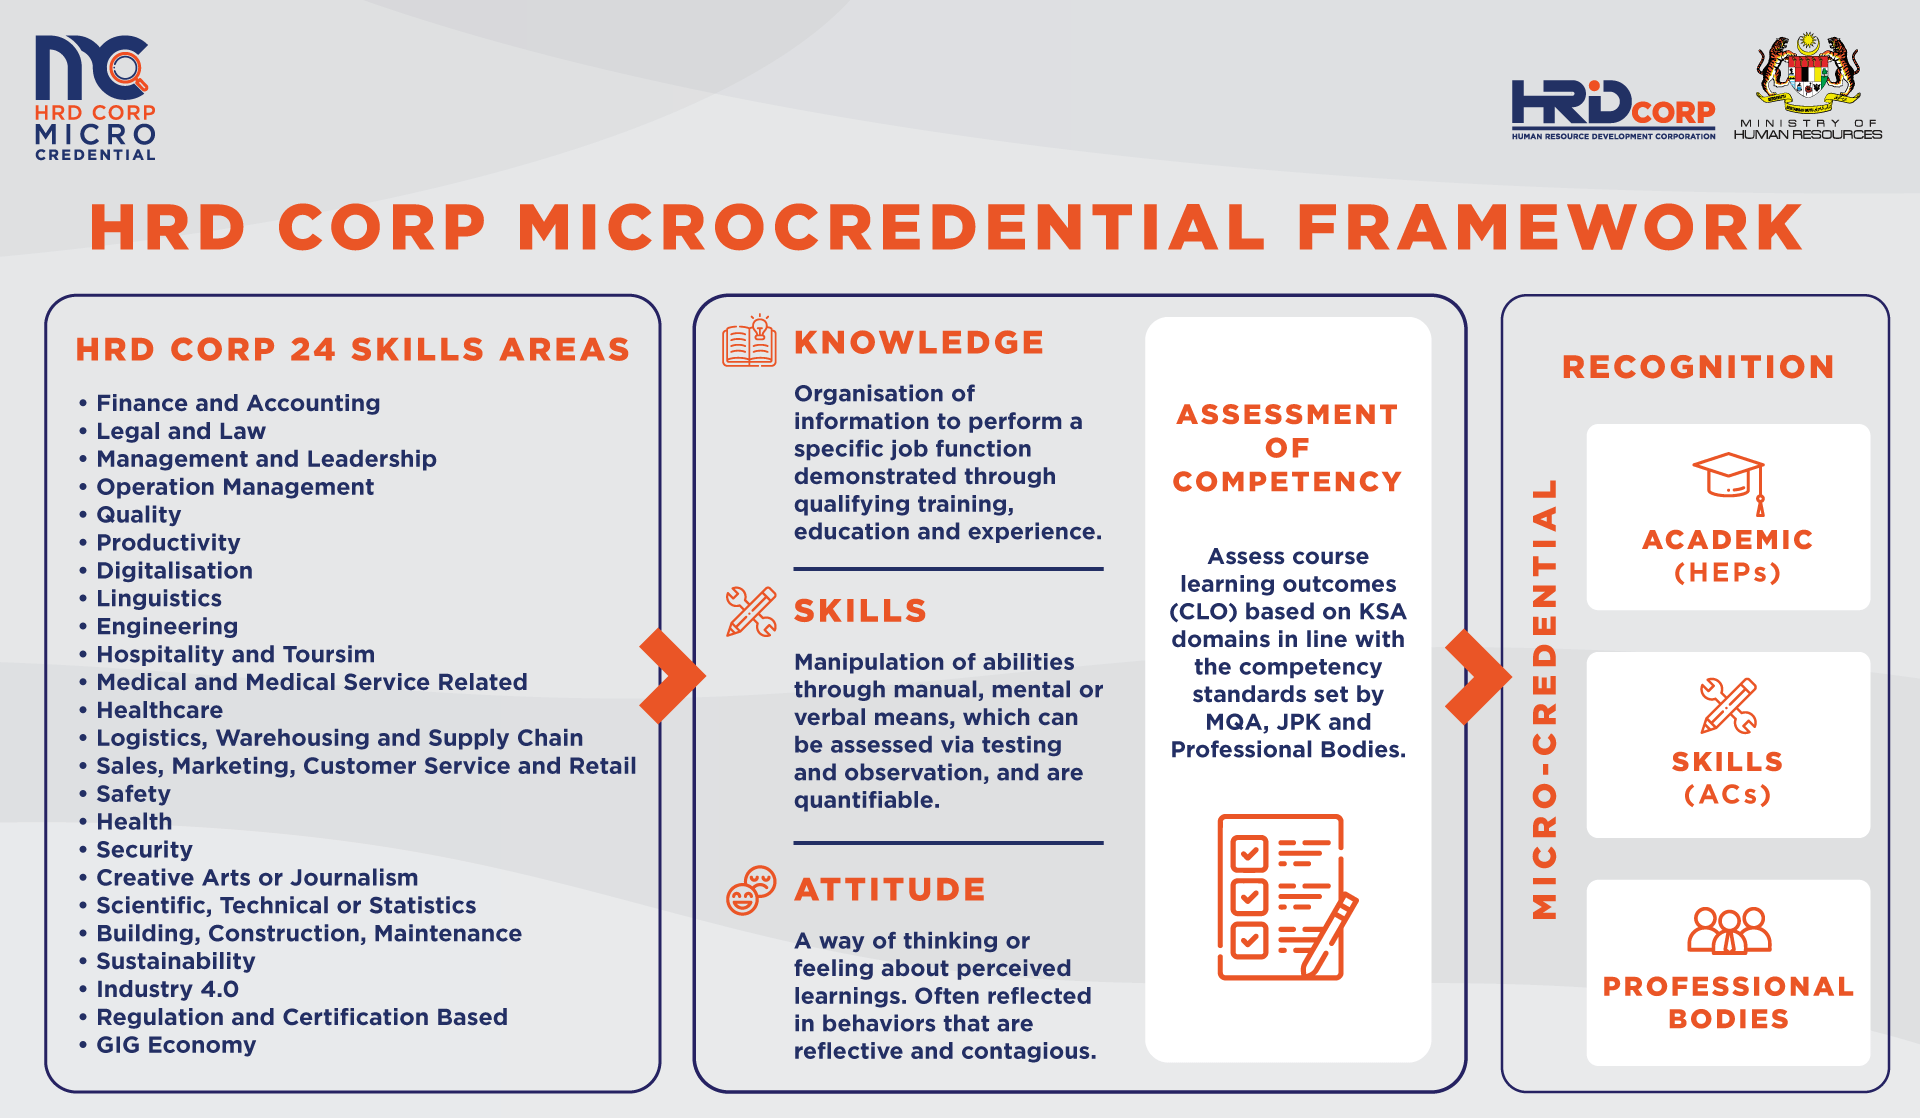 HRD Corp Microcredential Framework ENG